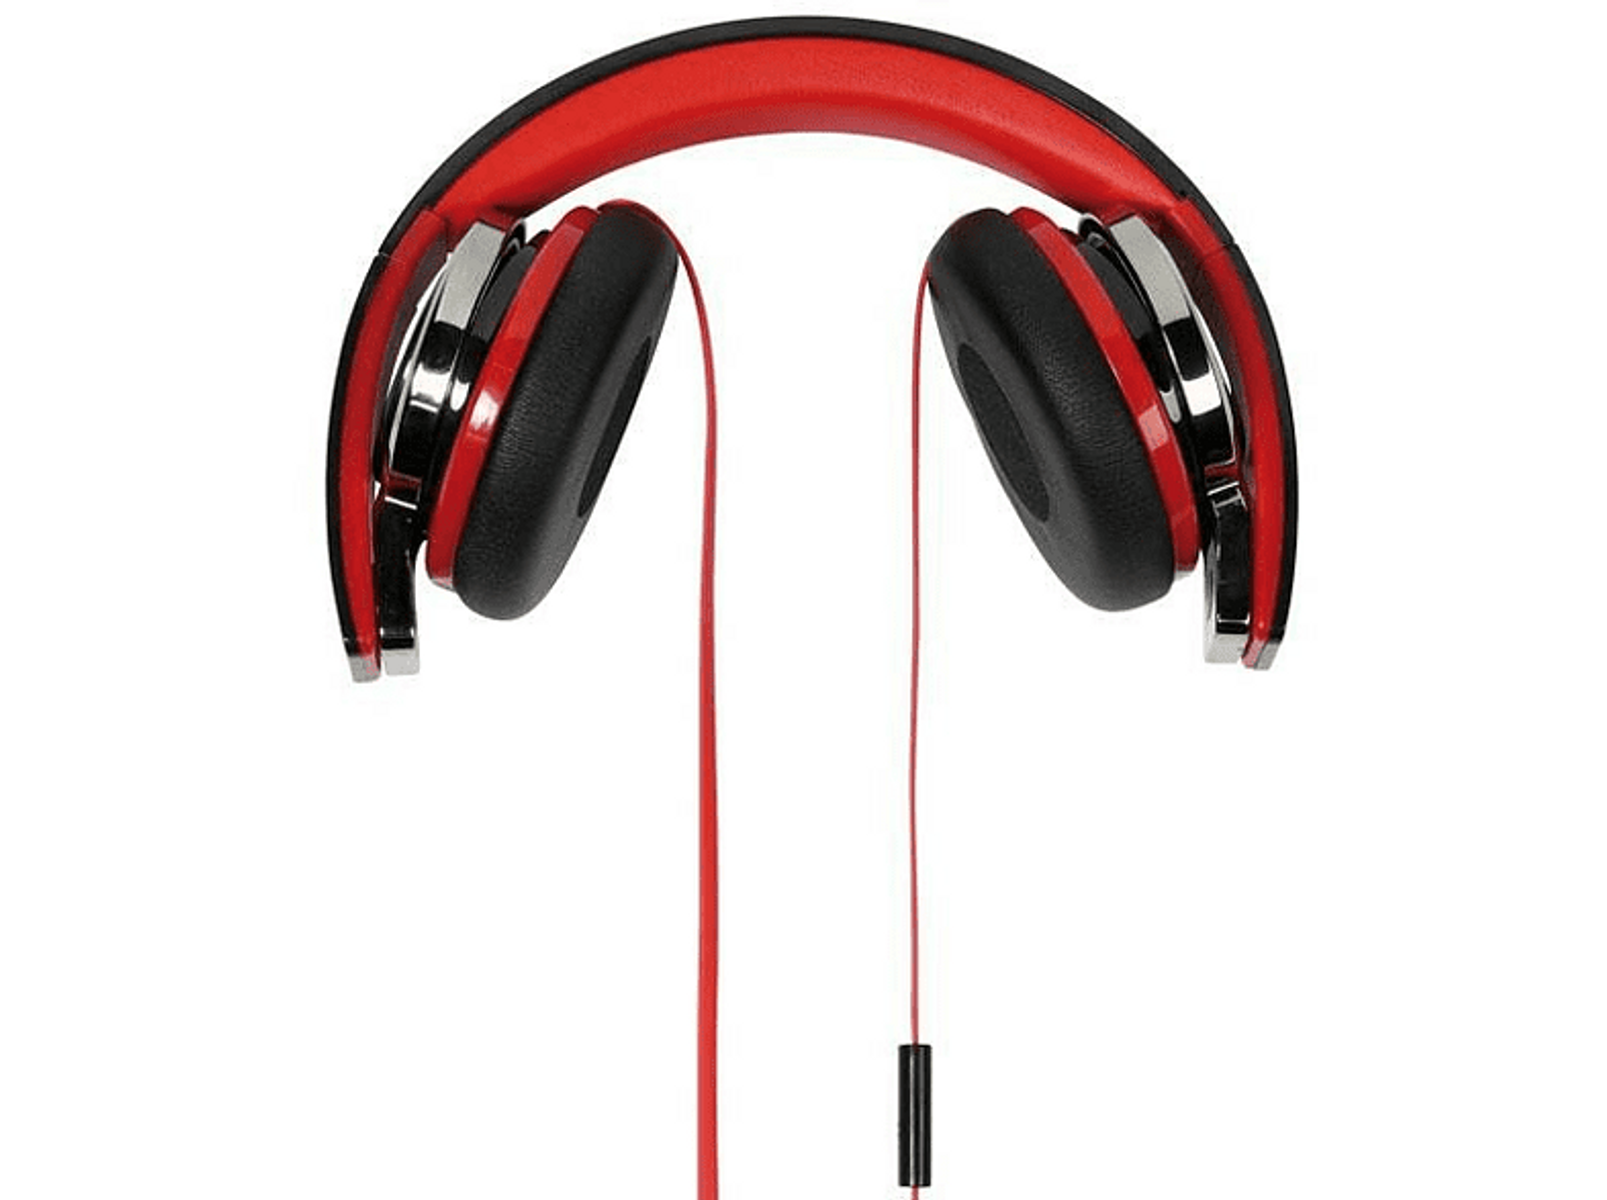 VIVANCO Rot 37573, Ohraufliegende On-ear Kopfhörer